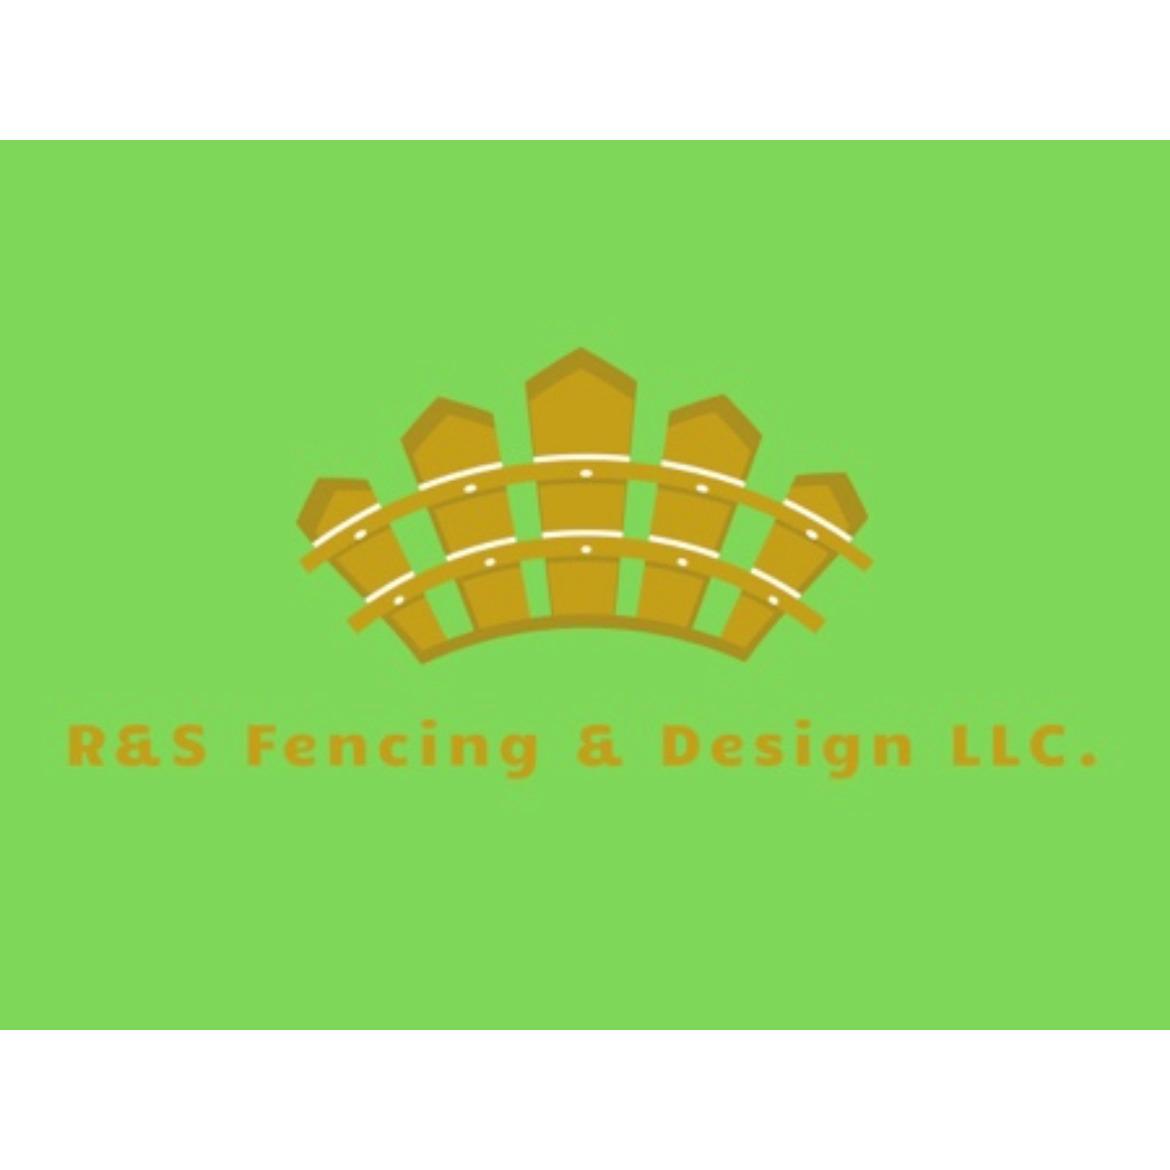 R&S Fencing & Design LLC.